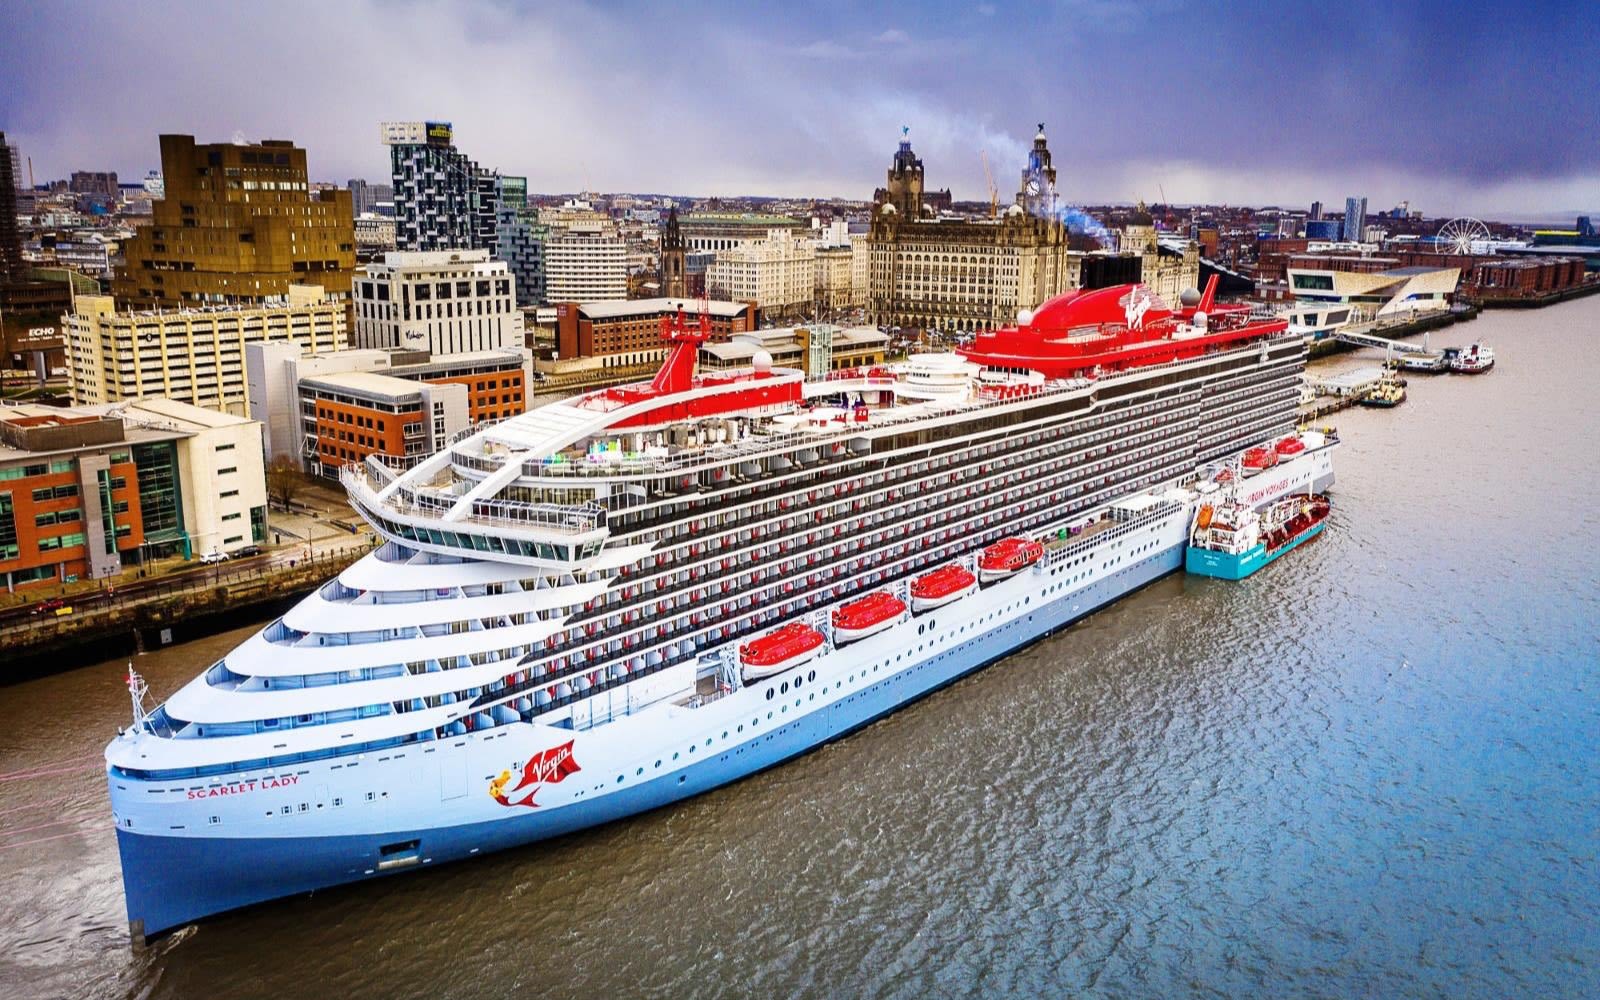 Virgin Voyages' Scarlet lady arrives in Liverpool